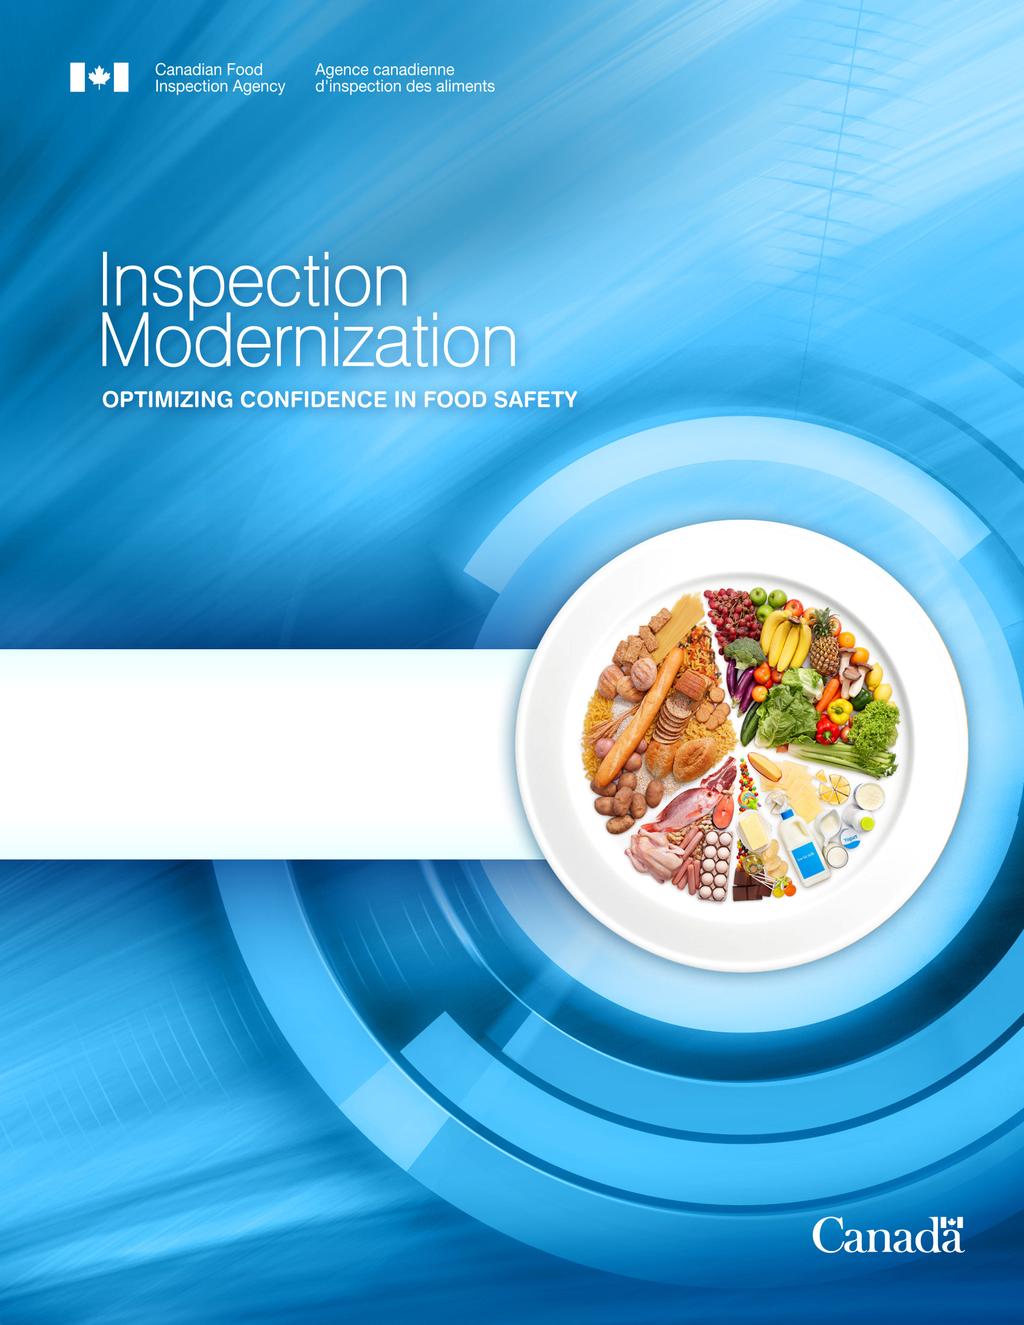 Improved Food Inspection Model The Case for Change DRAFT